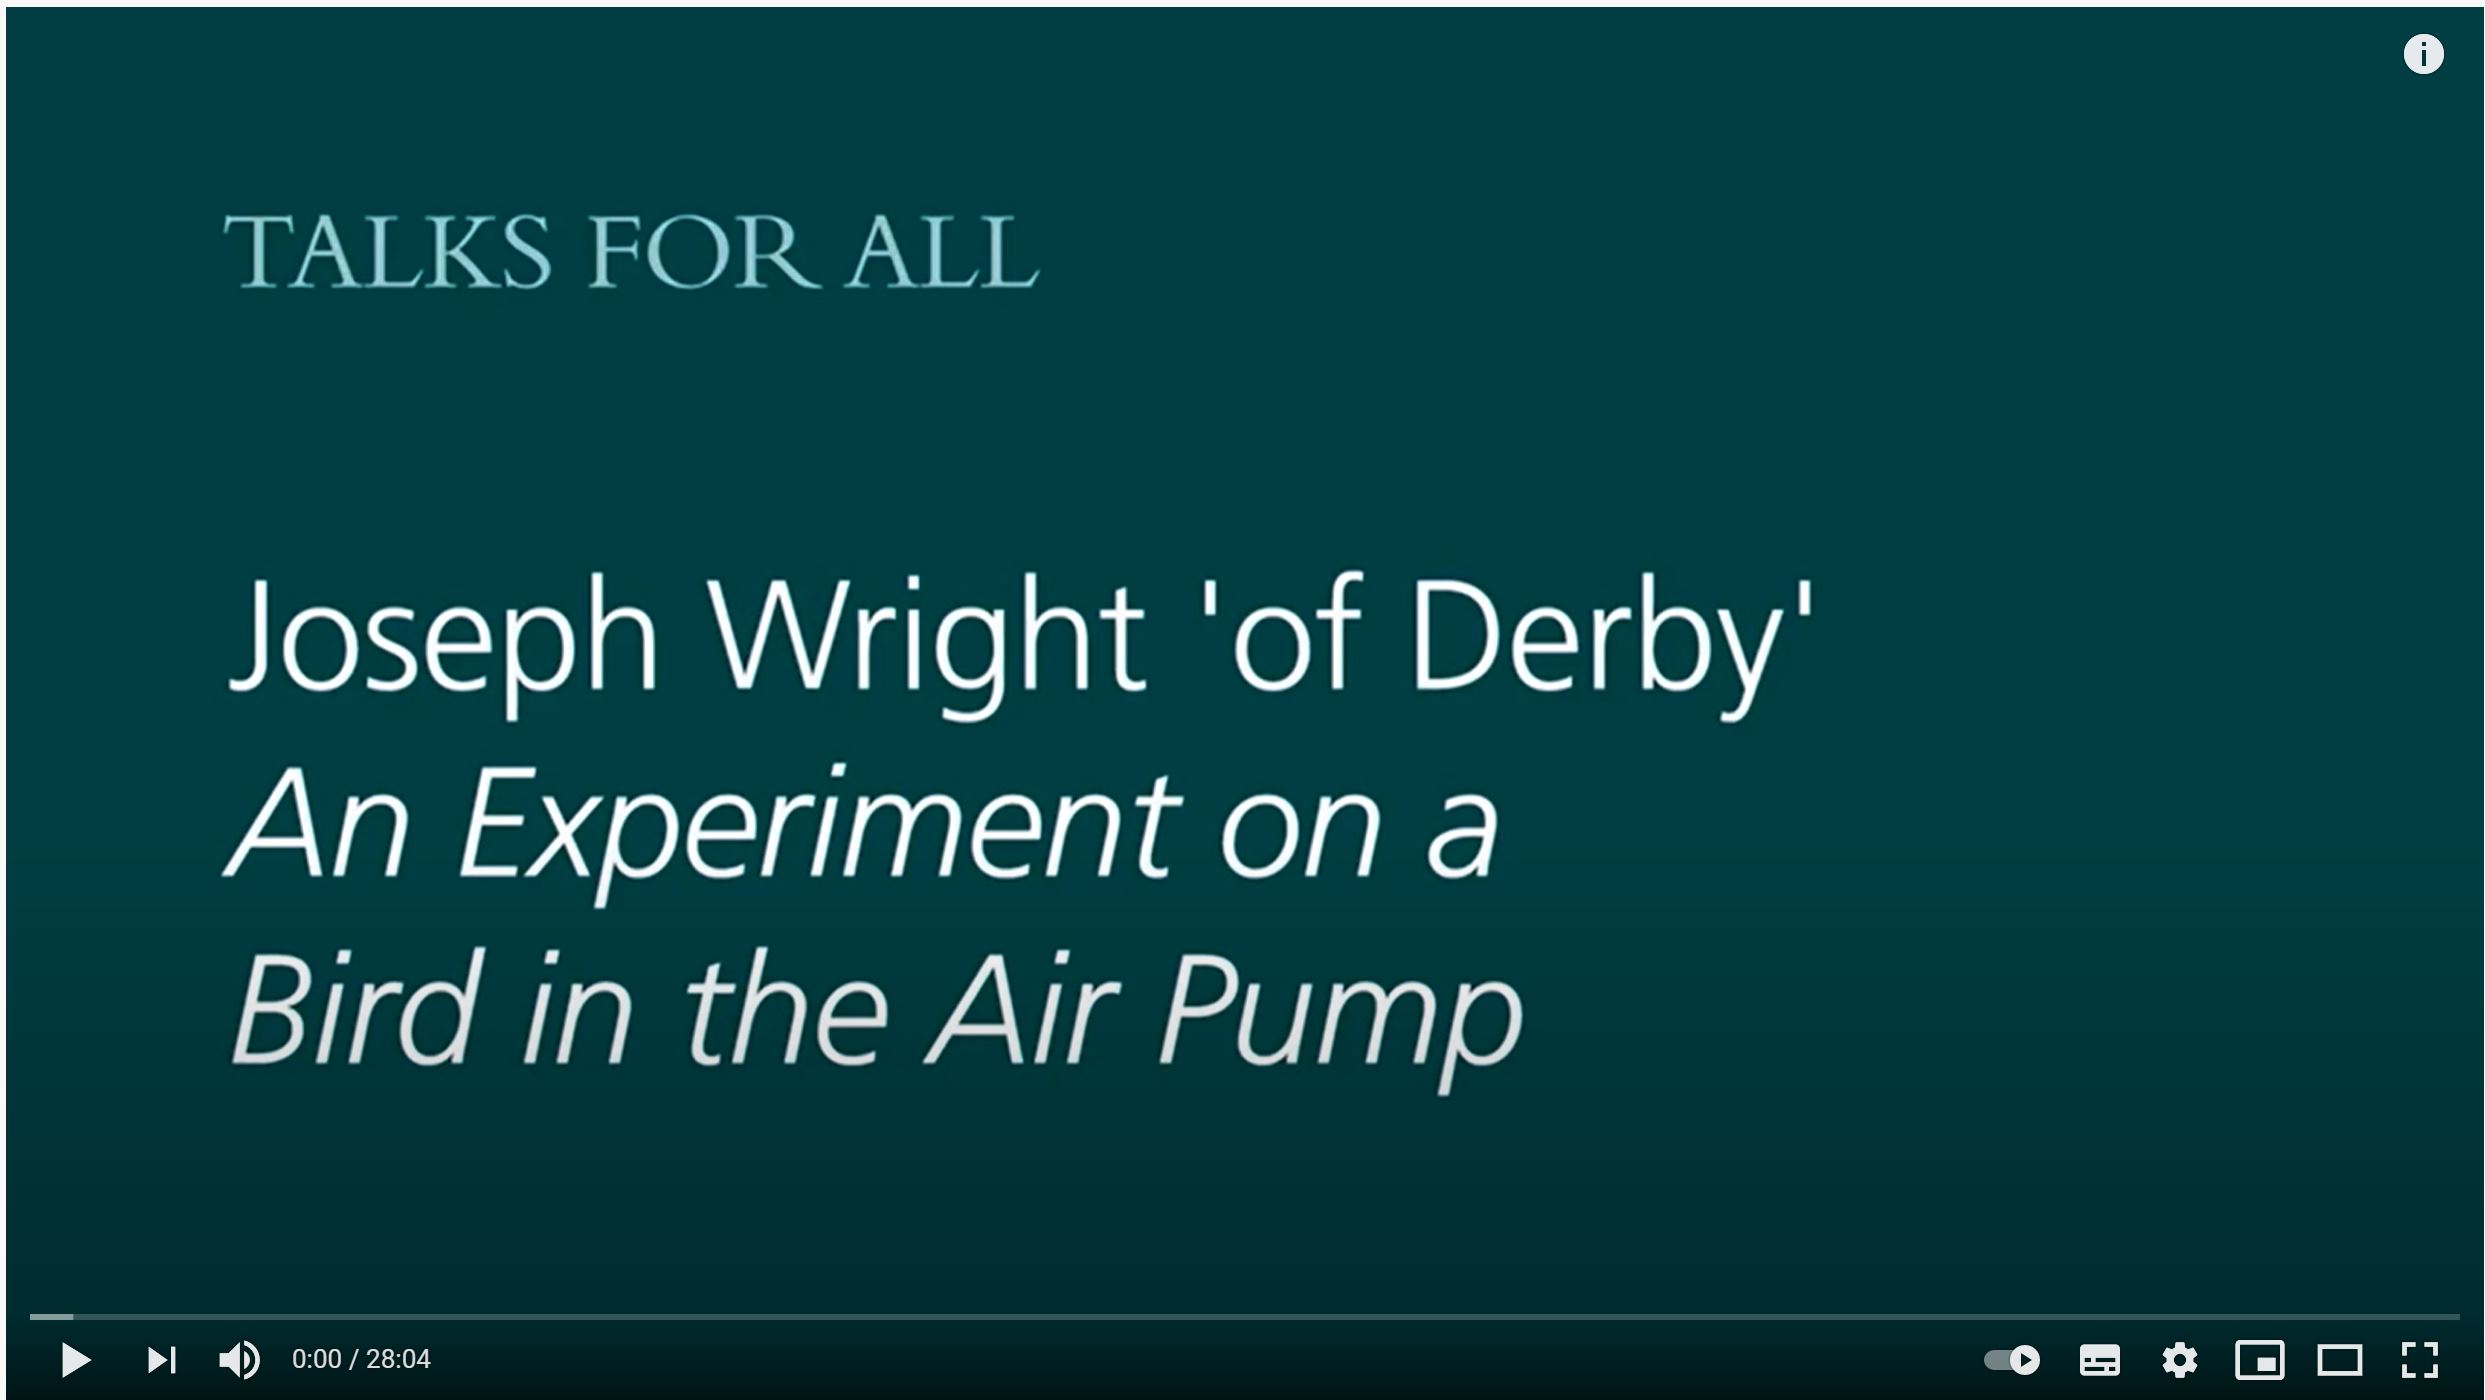 Adult Learning Programmer, Matthew Morgan, discuss <i>An Experiment on a Bird in an Airpump</i>.